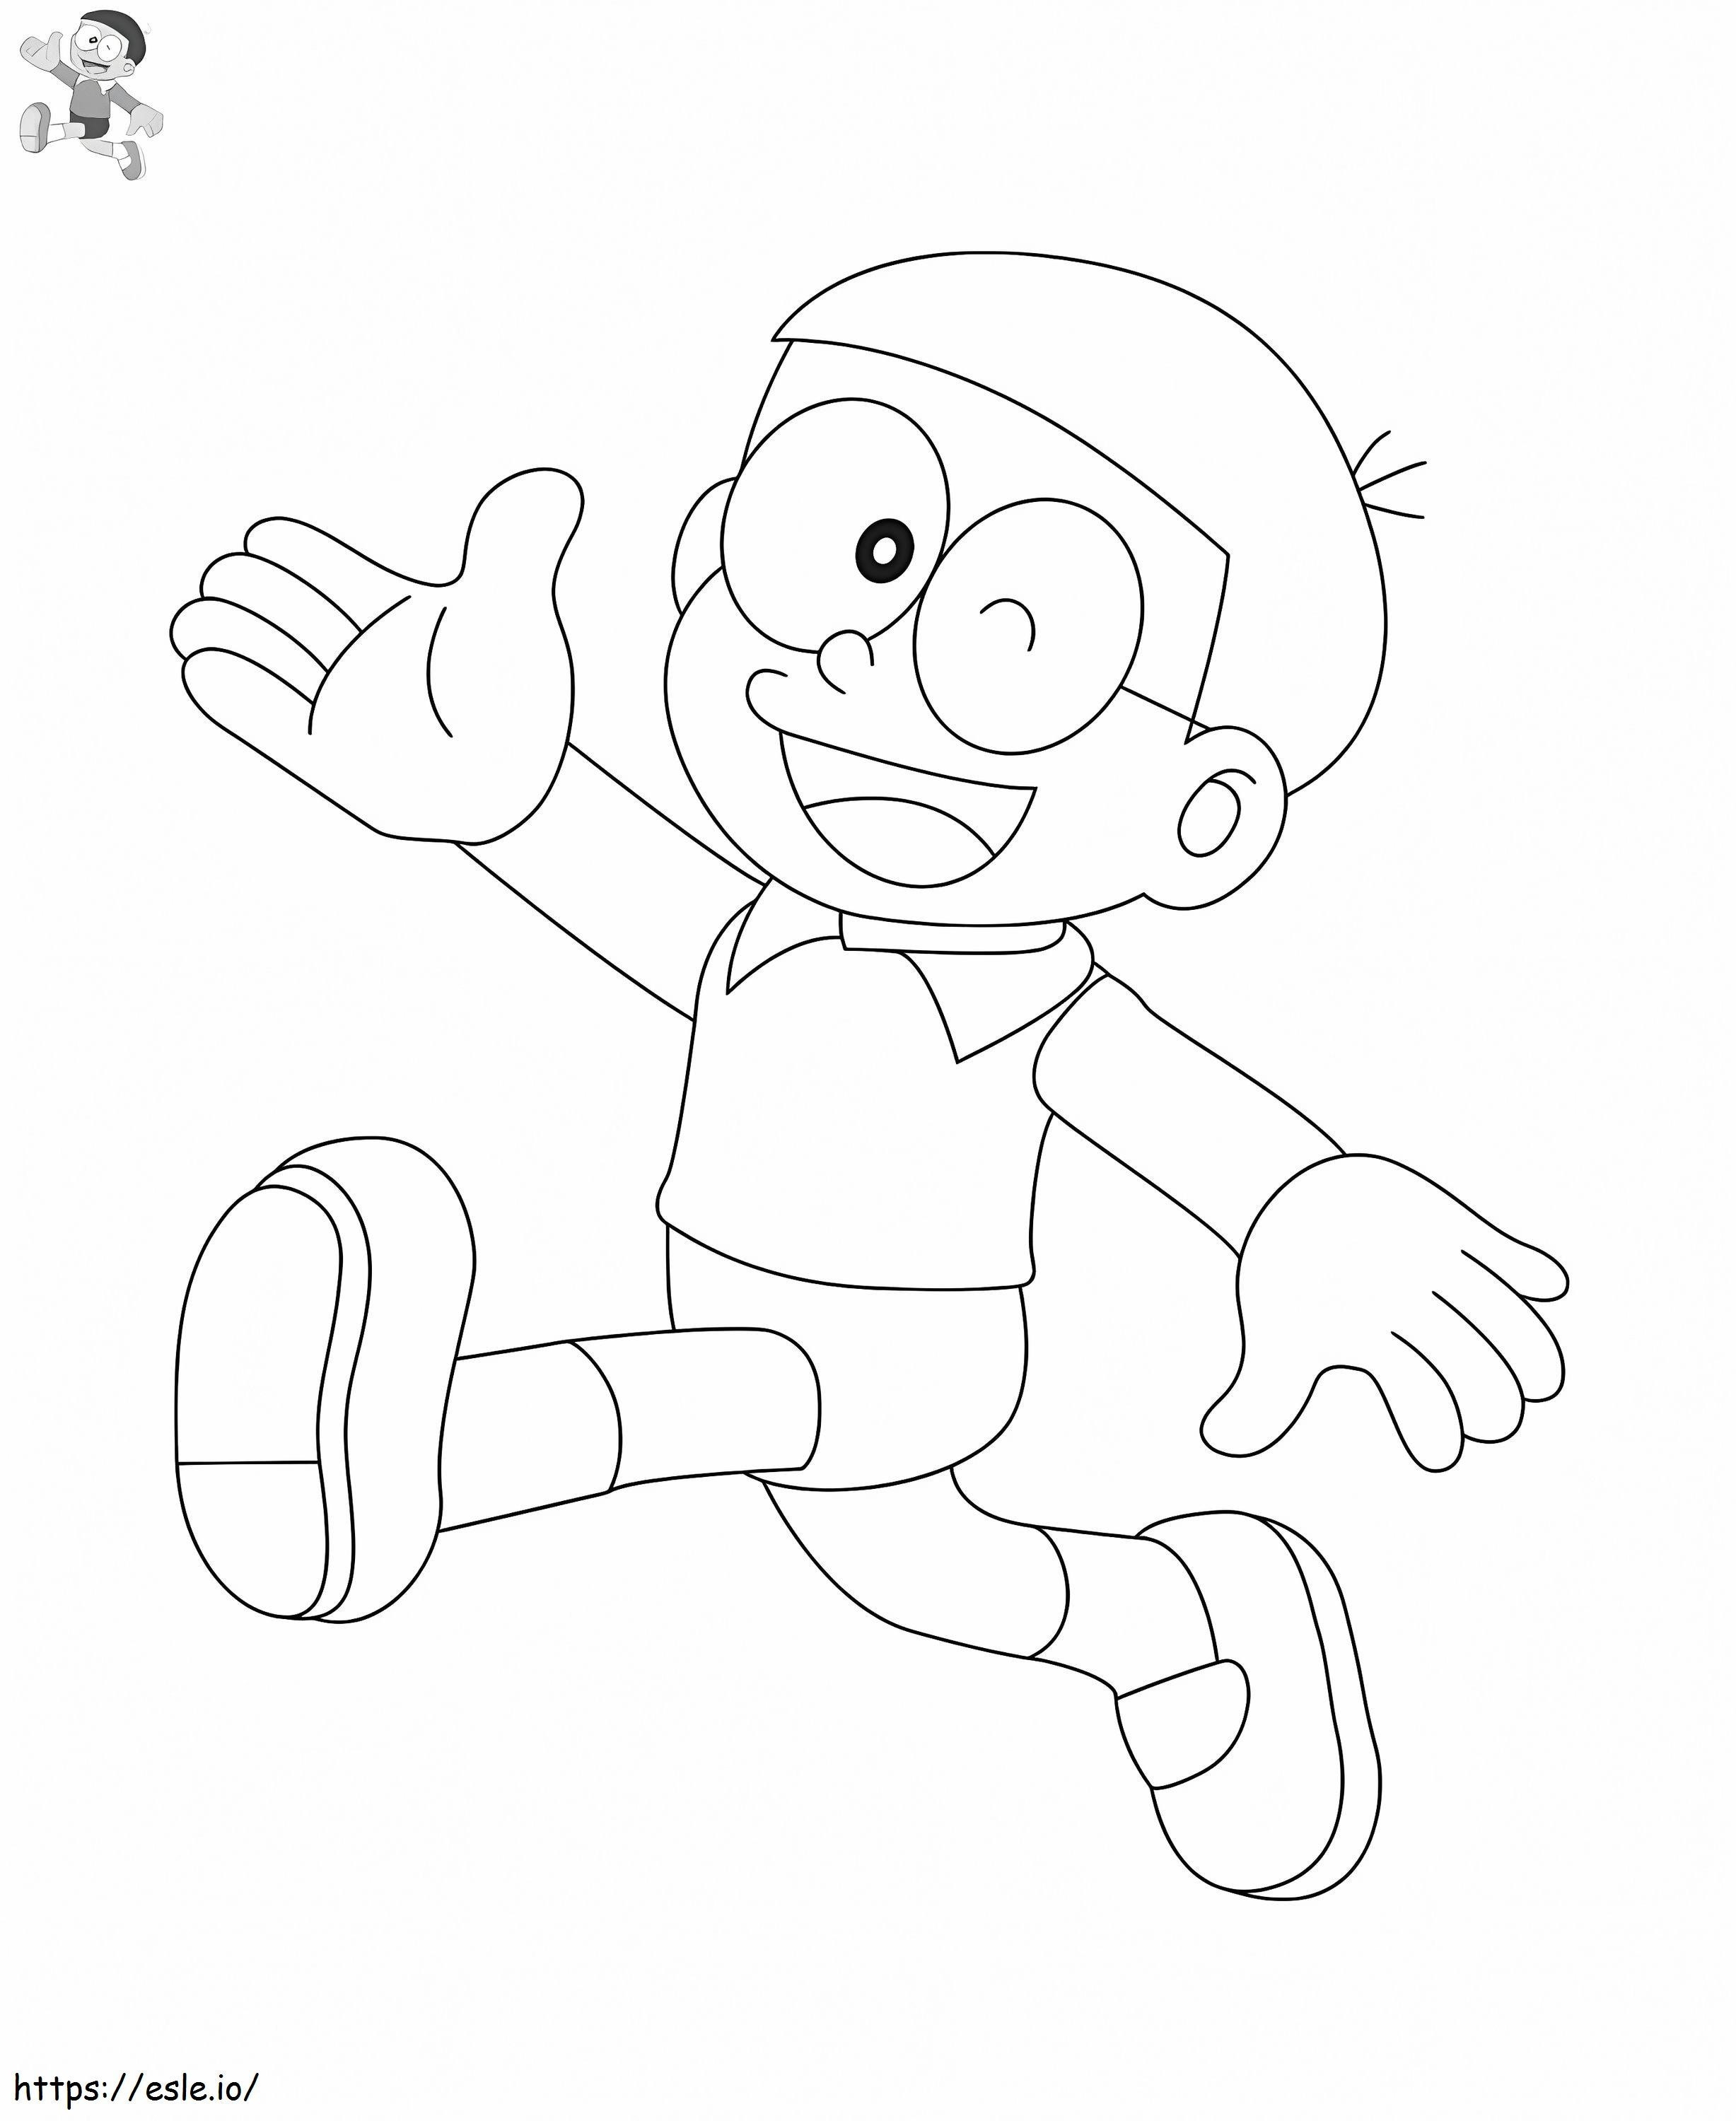 Nobita Running coloring page